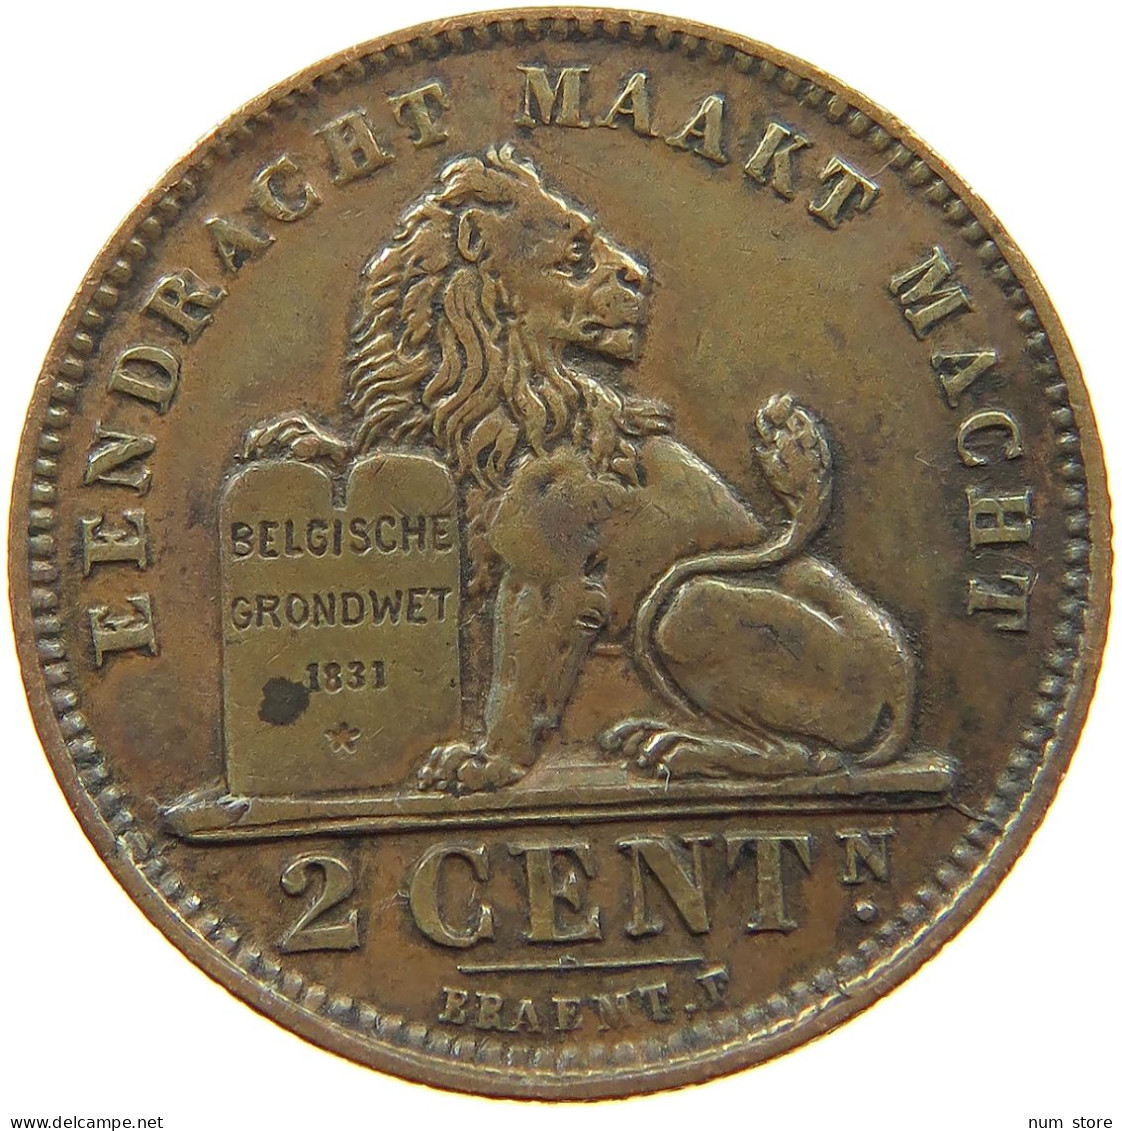 BELGIUM 2 CENTIMES 1911 #a012 0331 - 2 Cent